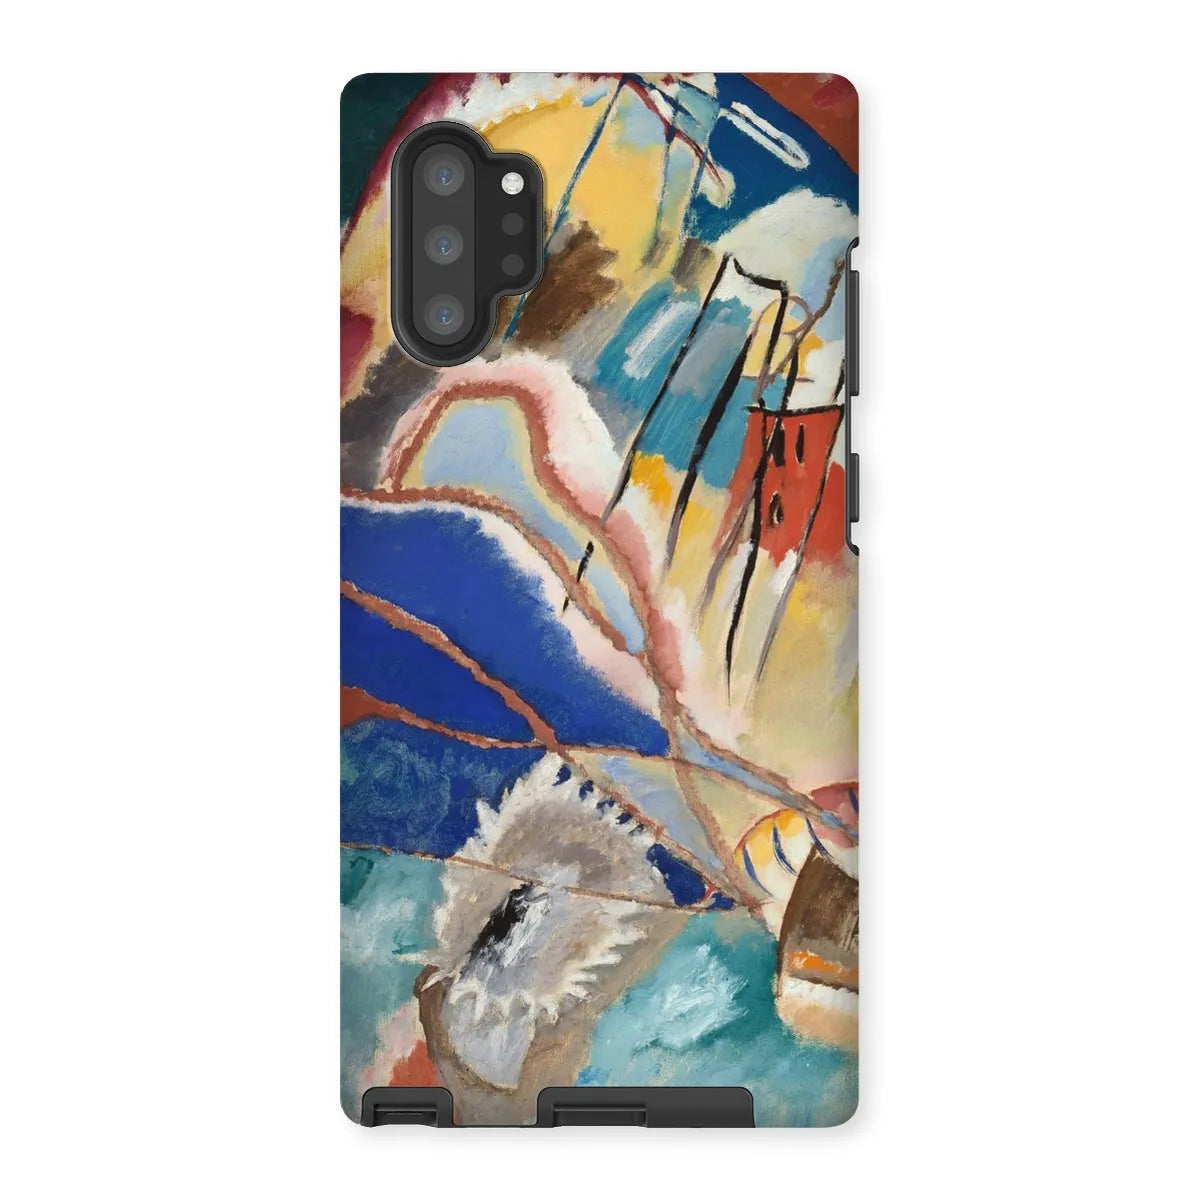 Improvisation No. 30 Art Phone Case - Wassily Kandinsky - Samsung Galaxy Note 10p / Matte - Mobile Phone Cases